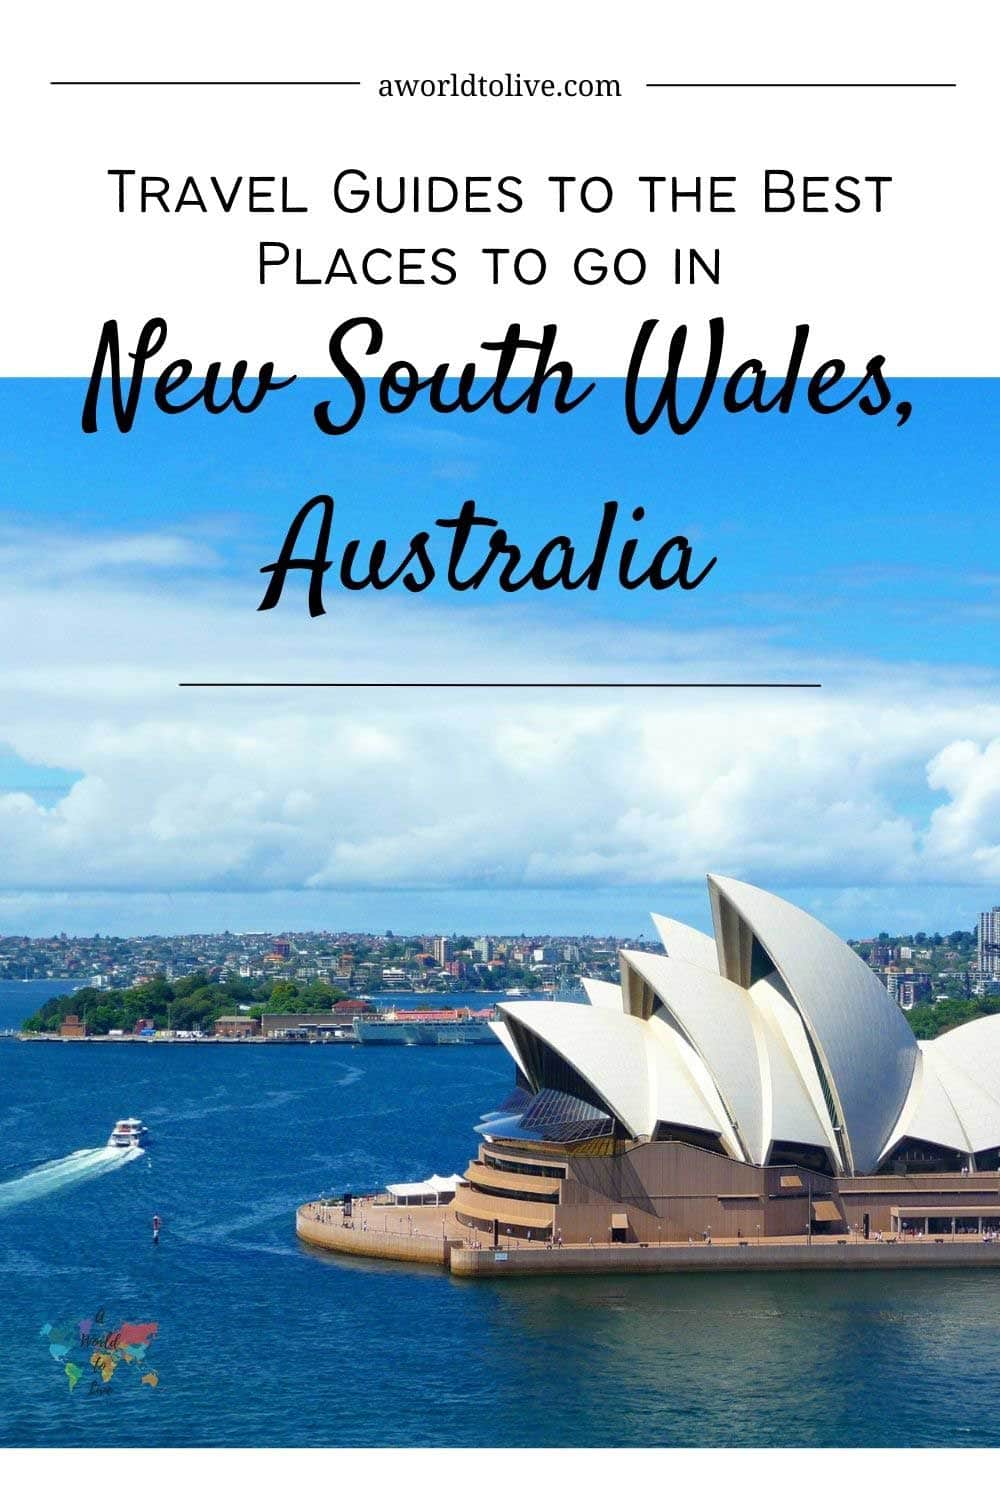 Sydney Harbor and the Sydney opera house on a sunny day. New South Wales Australia